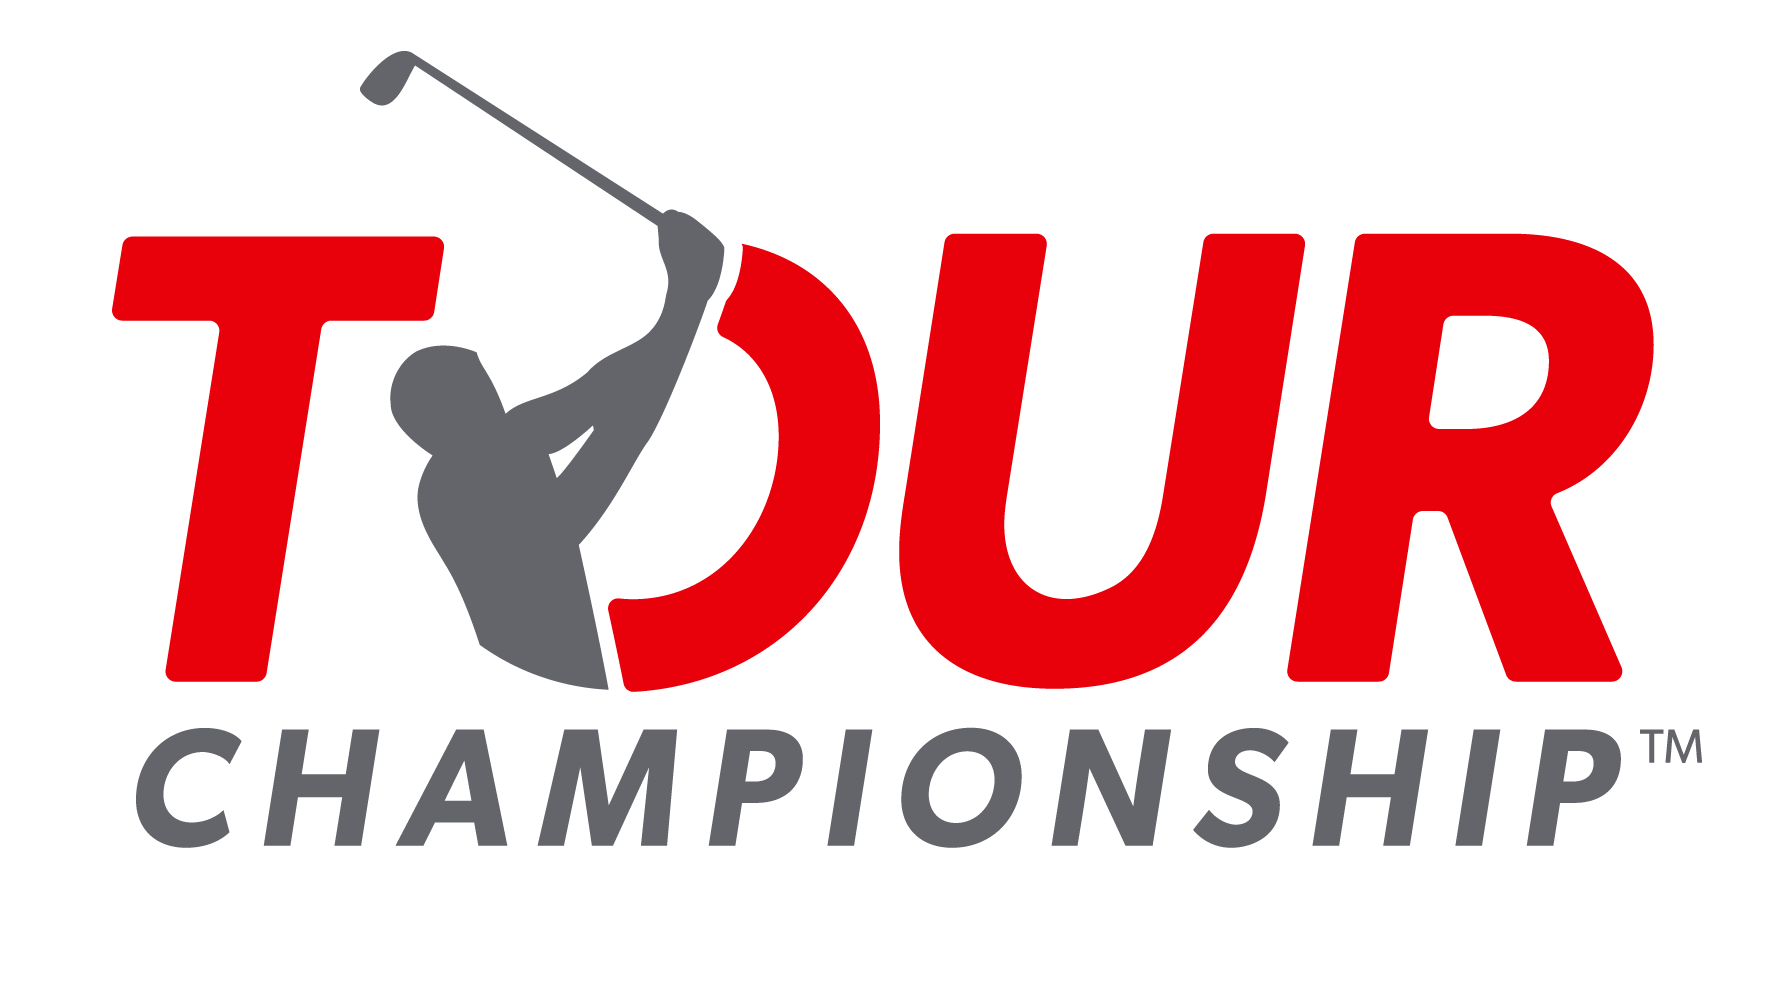 PGA Tour Championship East Lake Golf Club Atlanta, August 25